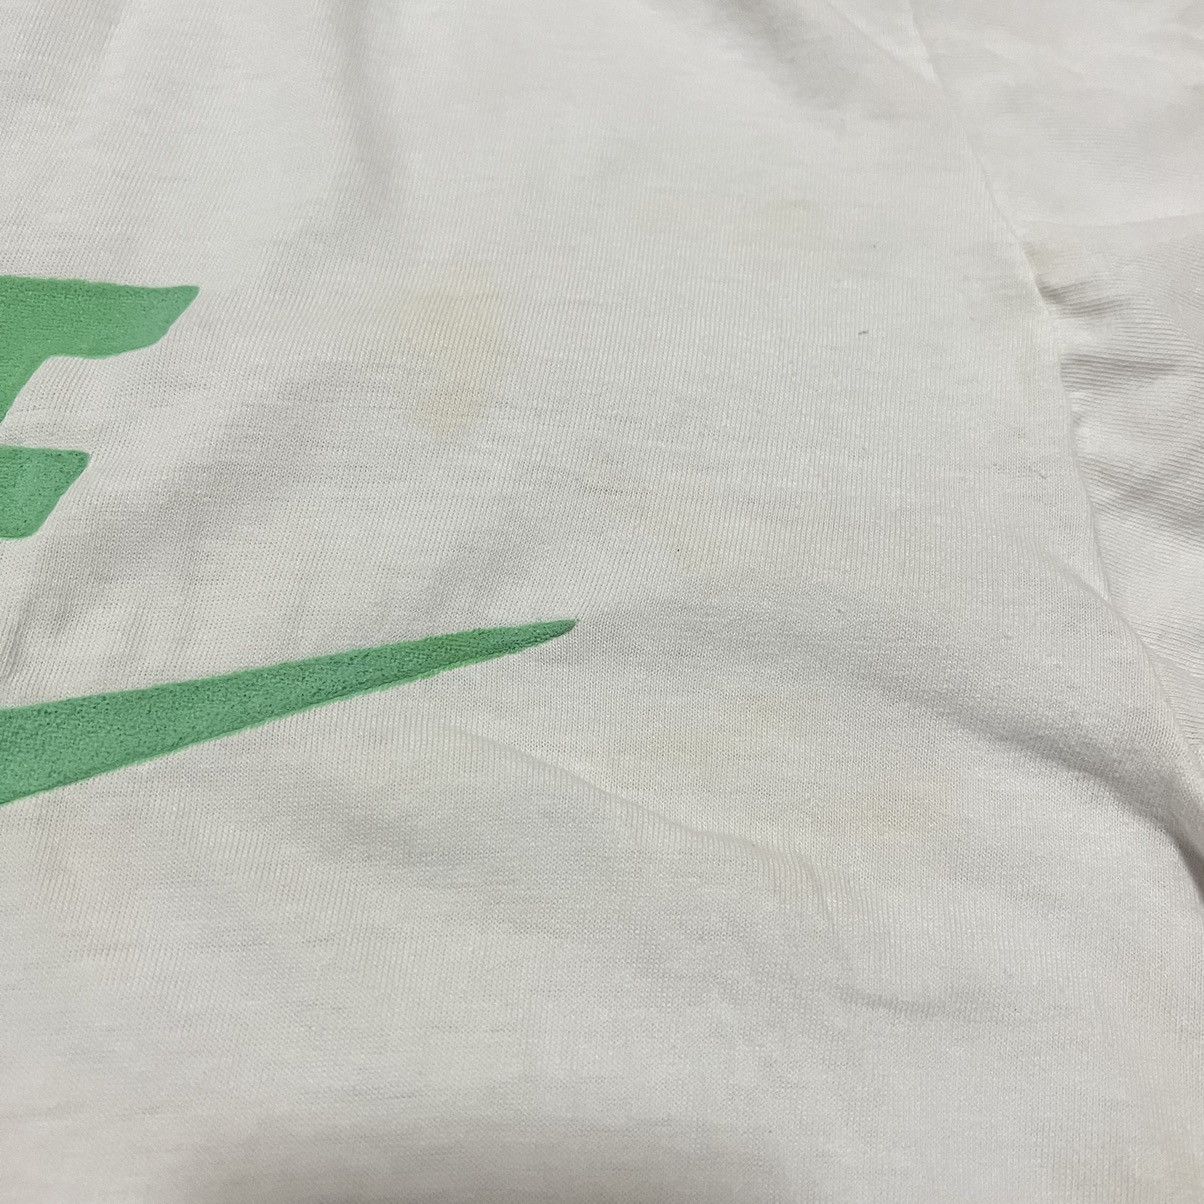 Vintage Nike Swoosh Logo T shirt Grey tag - 6